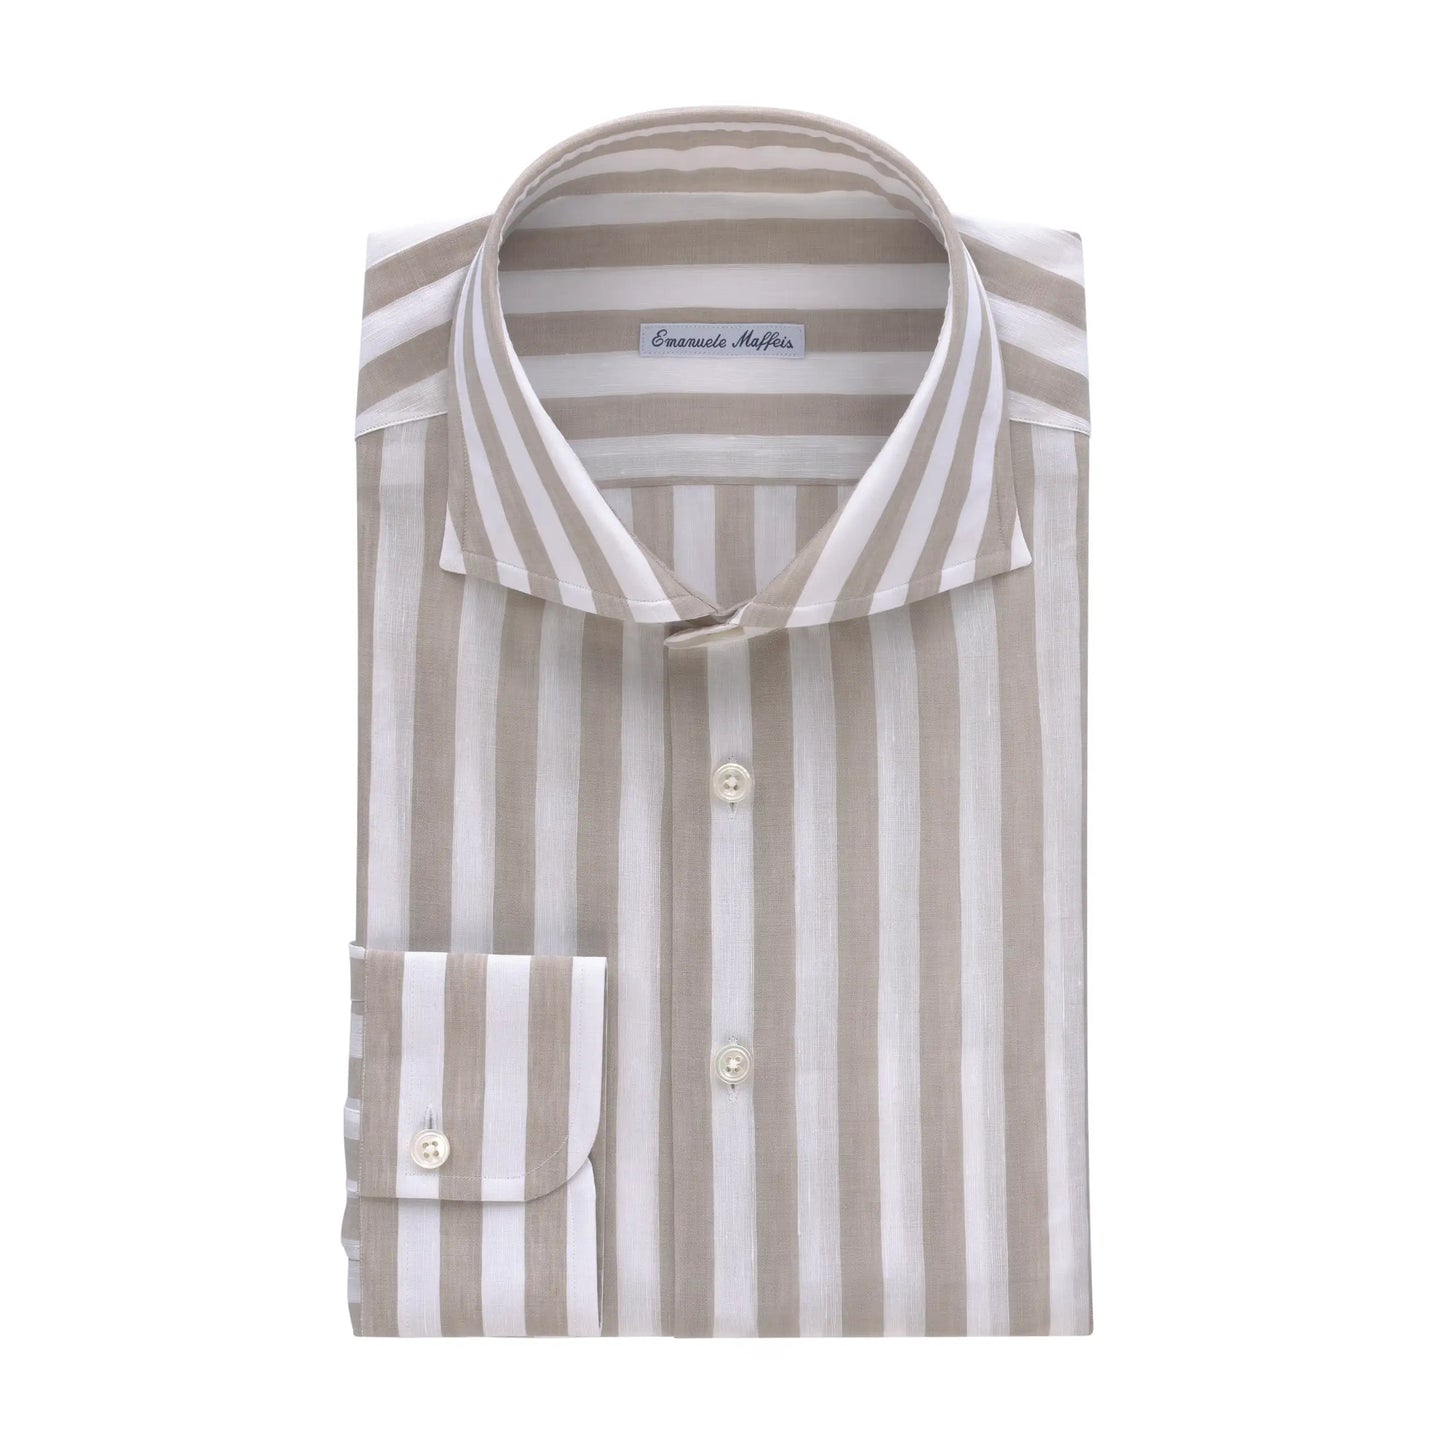 Emanuele Maffeis Striped Cotton - Linen Blend Shirt in White and Beige - SARTALE